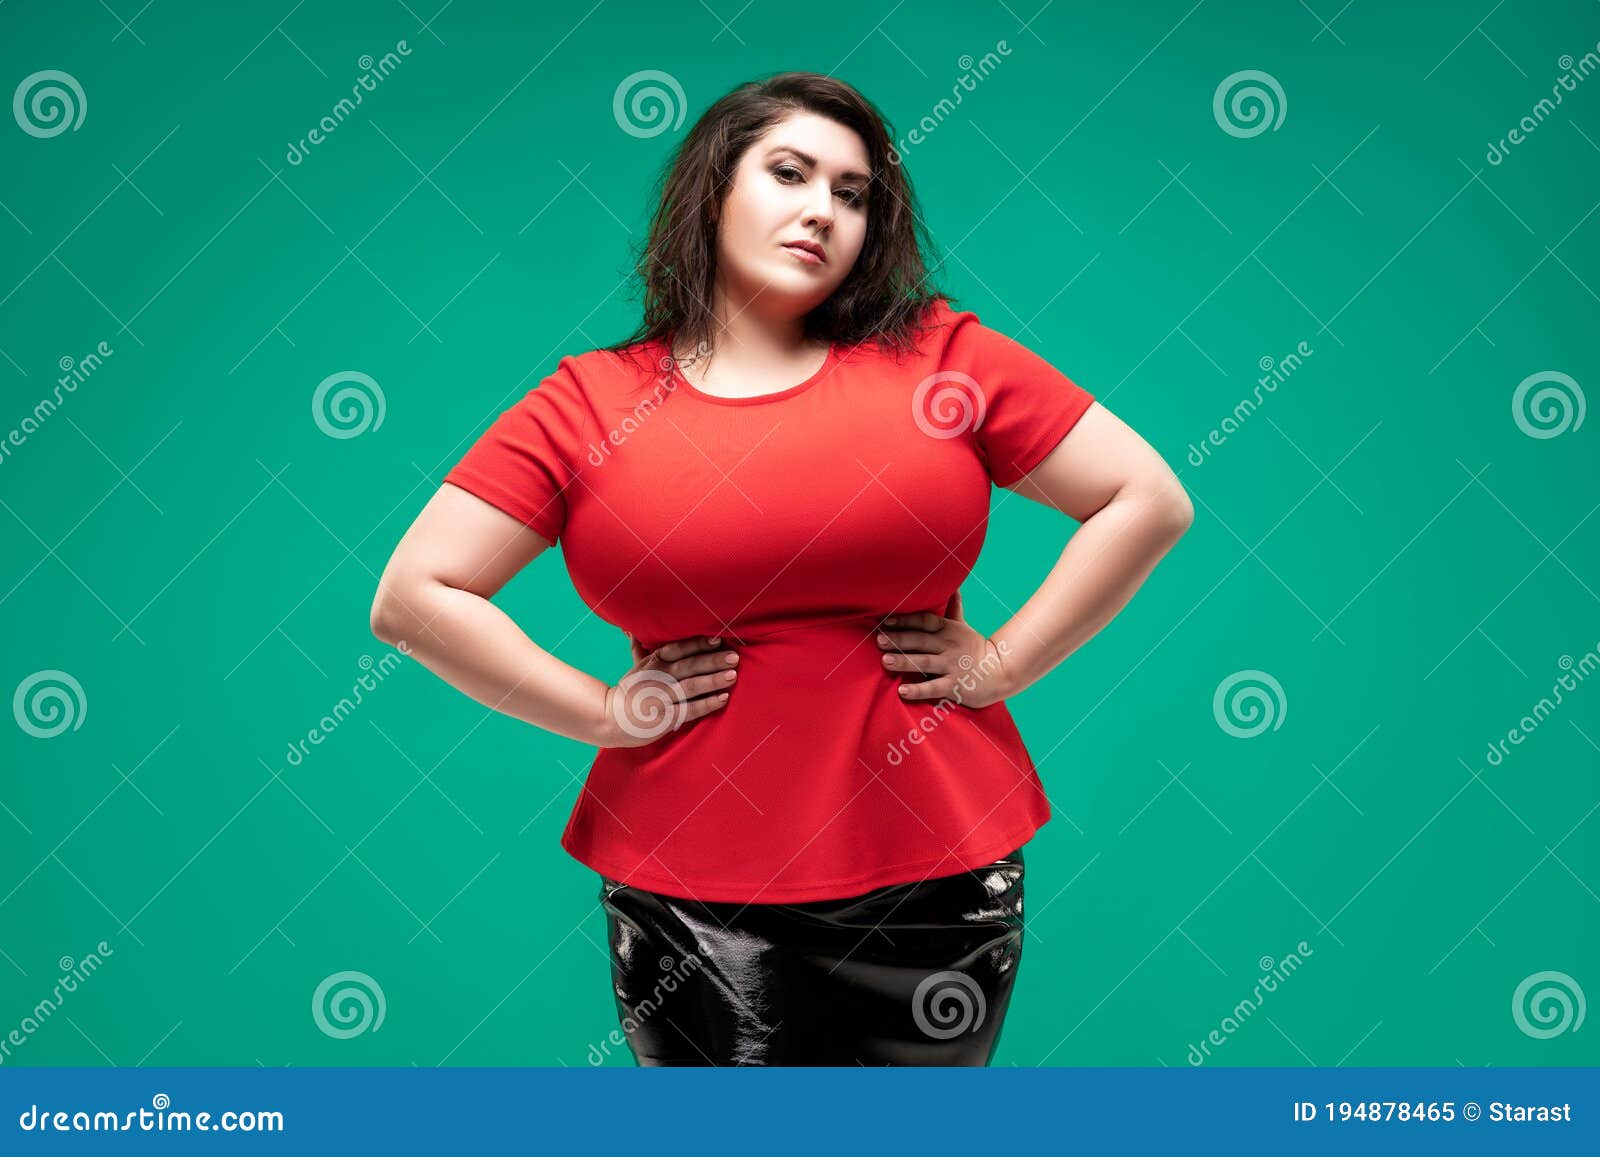 Más Modelo De Moda De Tamaño En Rojo Mujer Gorda De Blusa Sobre Fondo Verde Concepto Positivo De Cuerpo De Fondo Verde Imagen de archivo - Imagen de belleza: